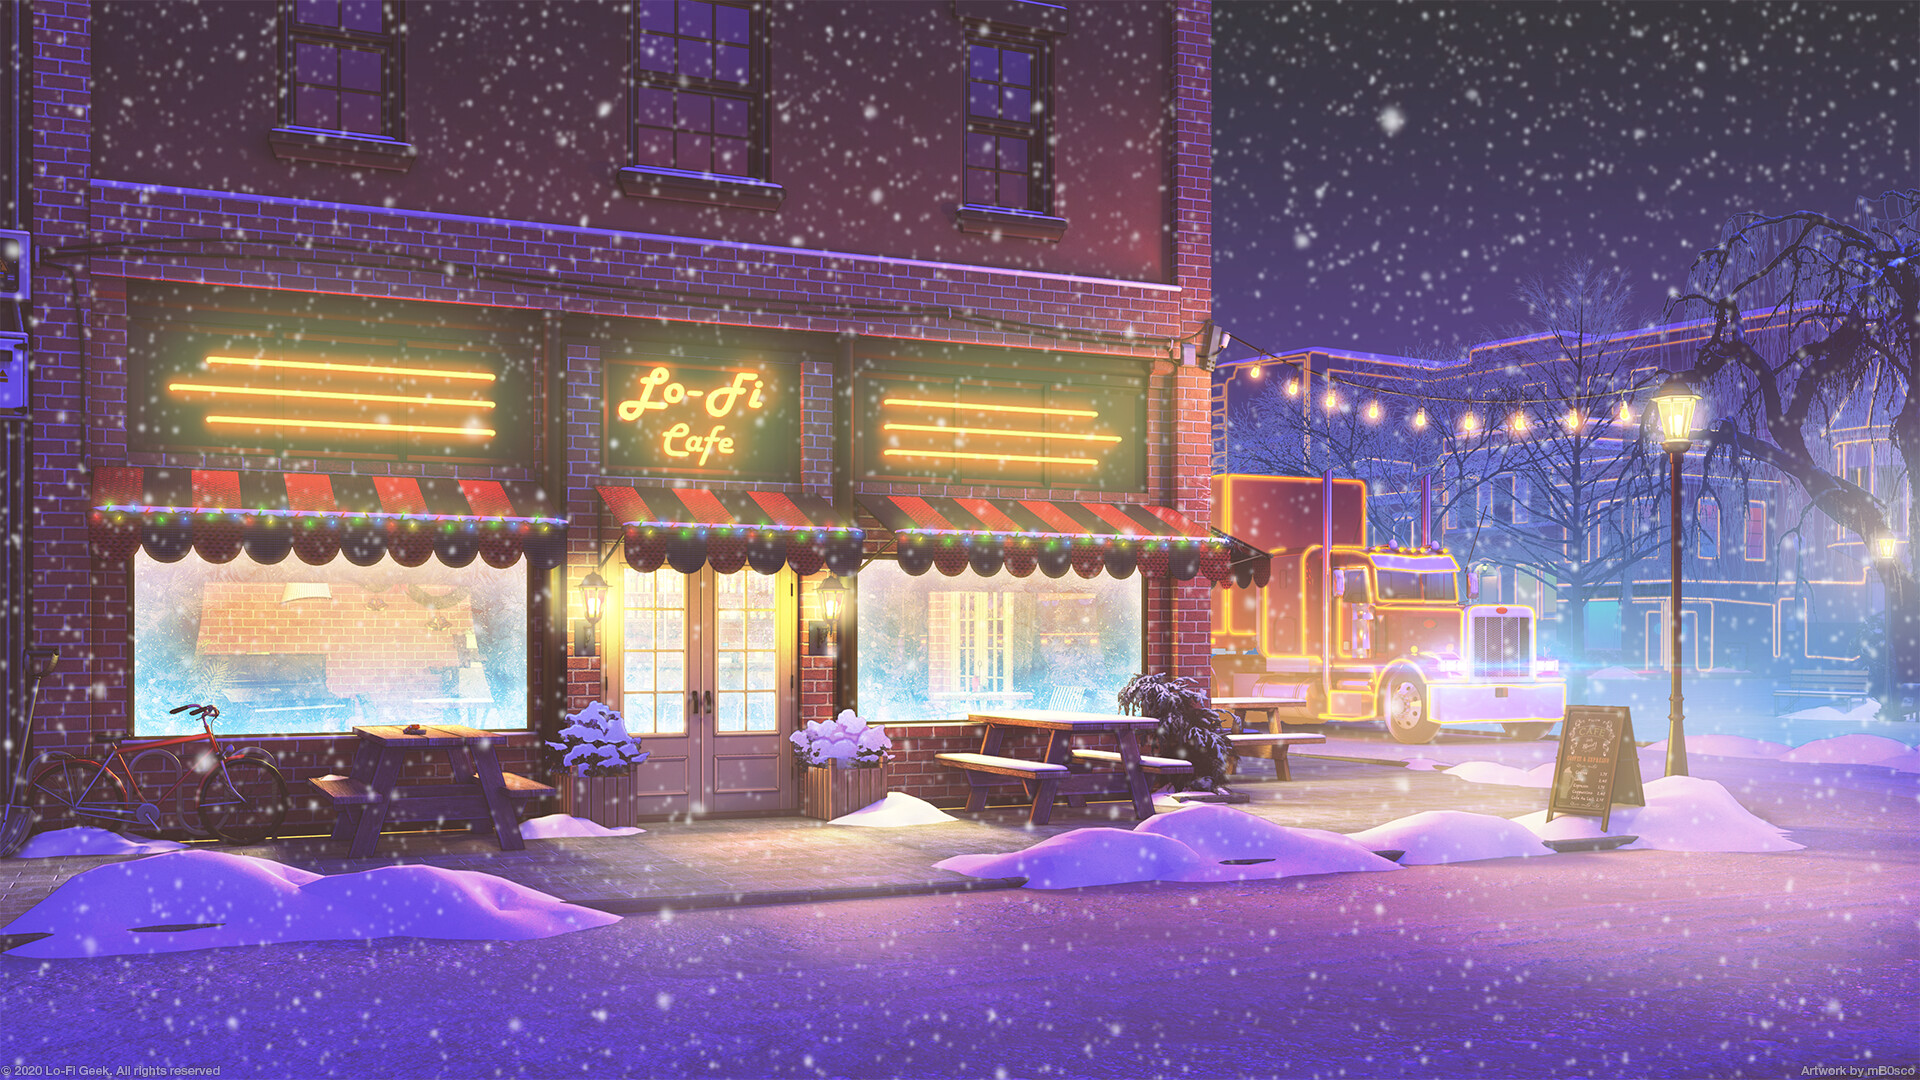 Anime 1920x1080 Bogdan mB0sco digital art snow snowing truck cafe winter night artwork Christmas holiday ArtStation urban town